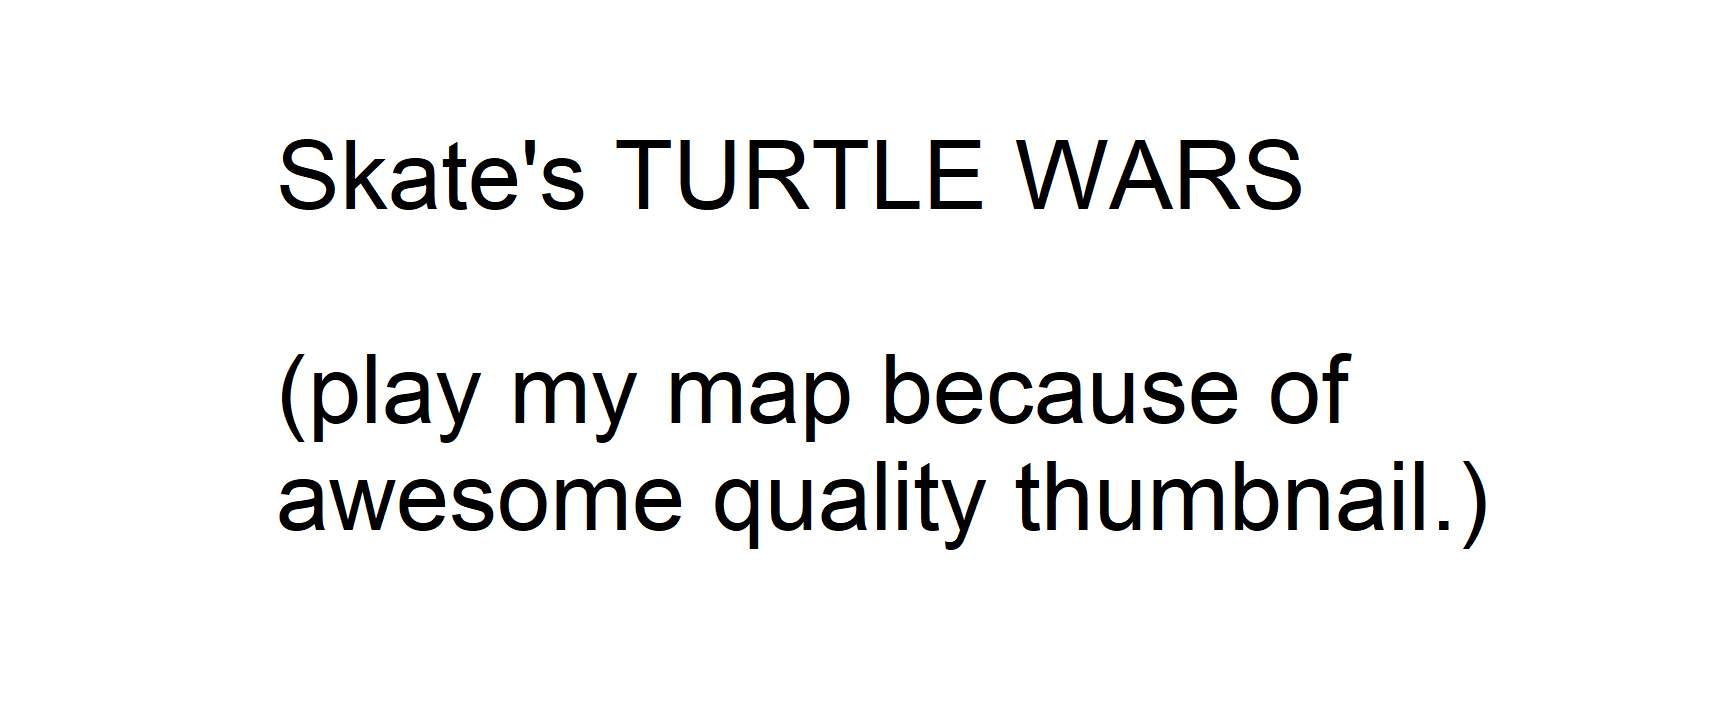 SKATE'S TURTLE WARS image 2